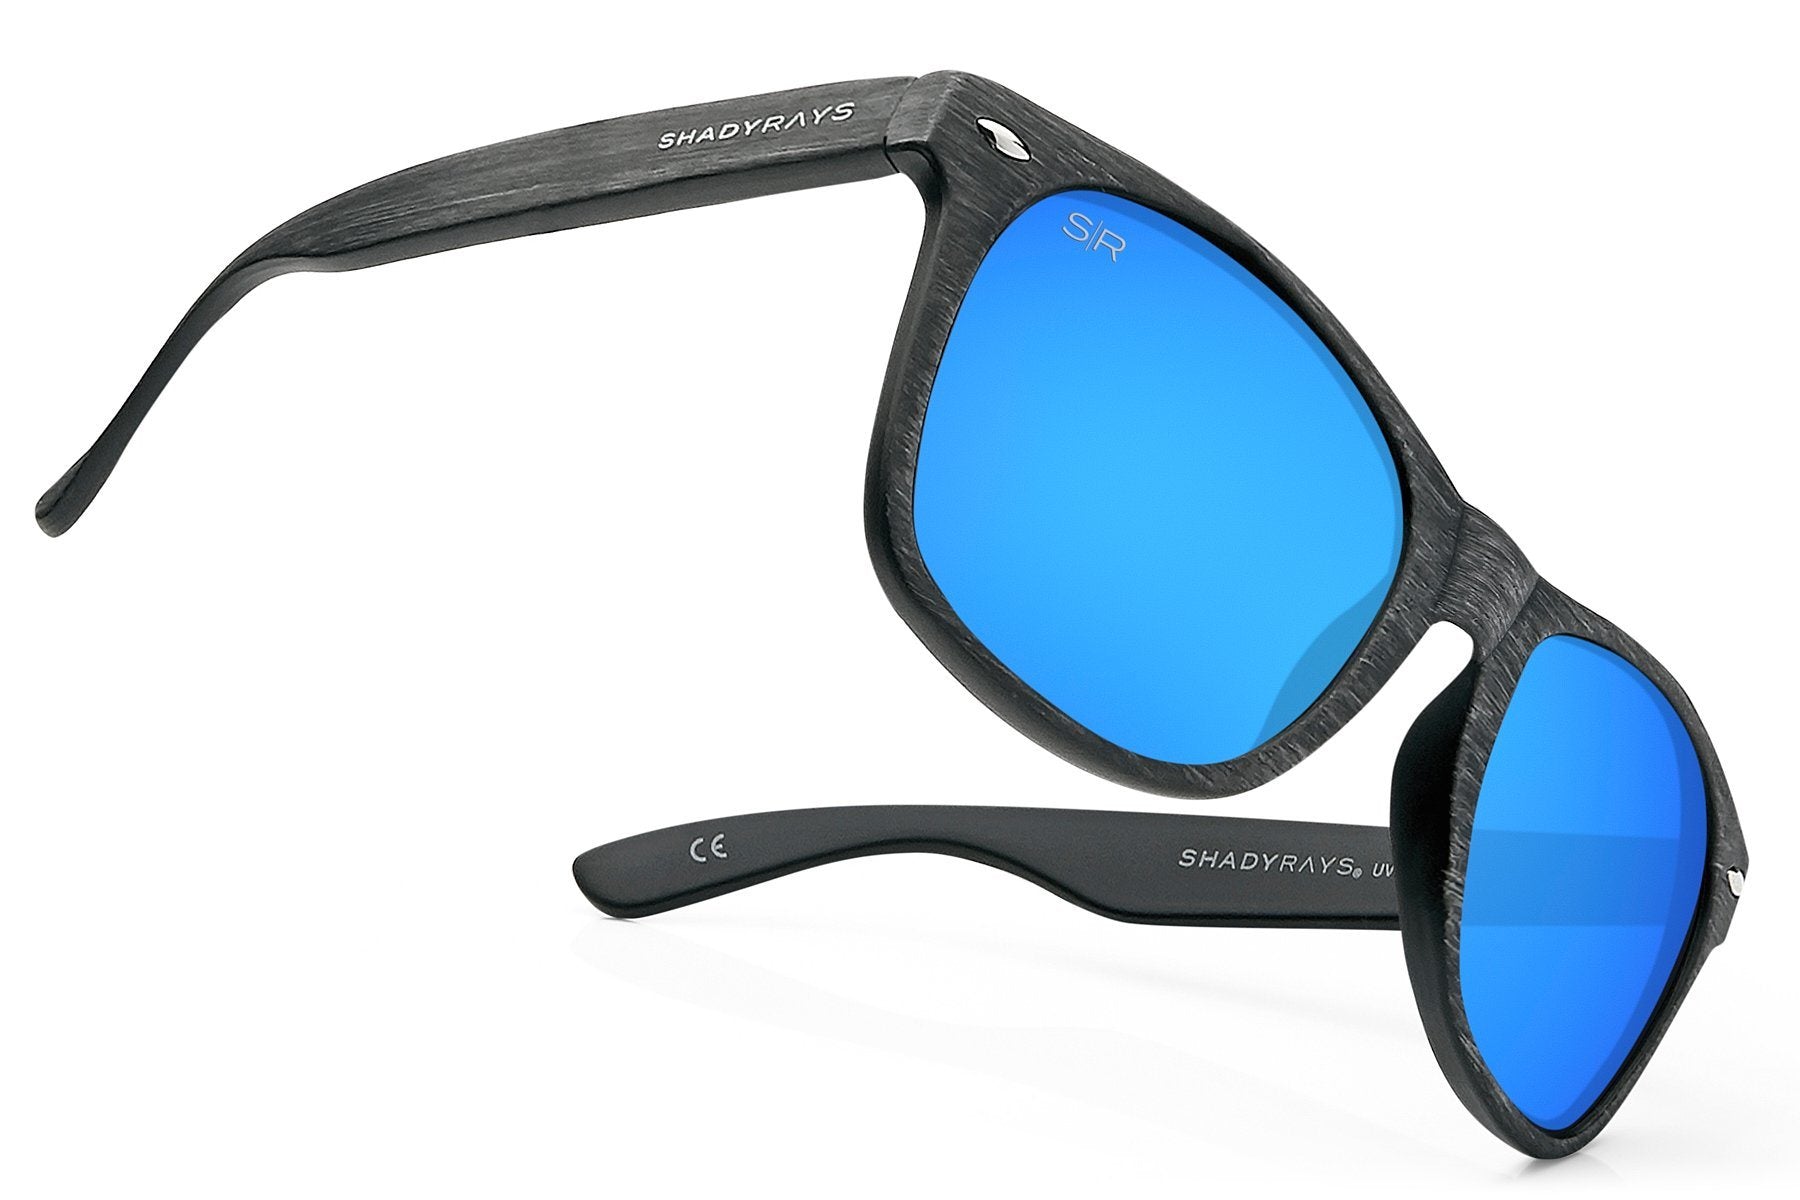 Alpine Swiss Mens Polarized Aviator Sunglasses Lightweight 100% UV 400  Protection - Alpine Swiss